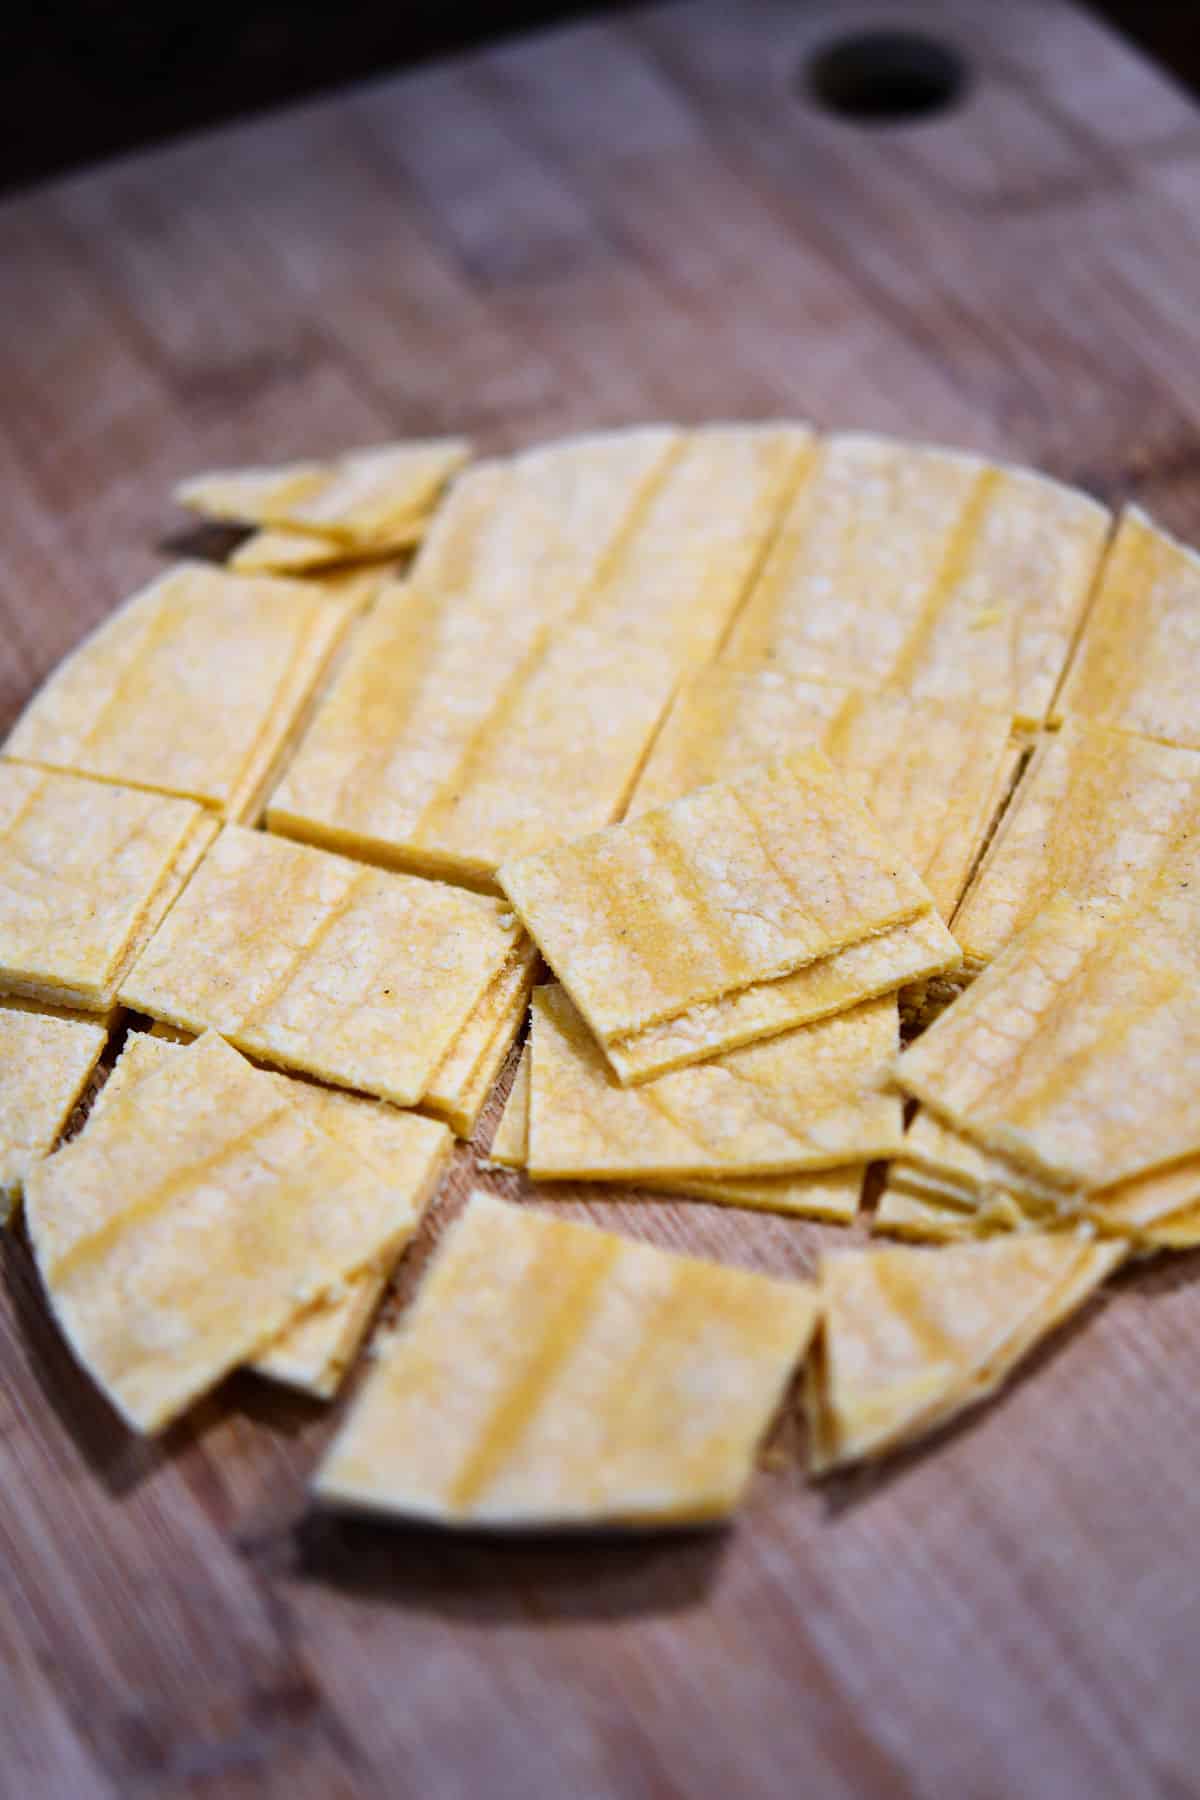 cut the corn tortillas into bite sized pieces